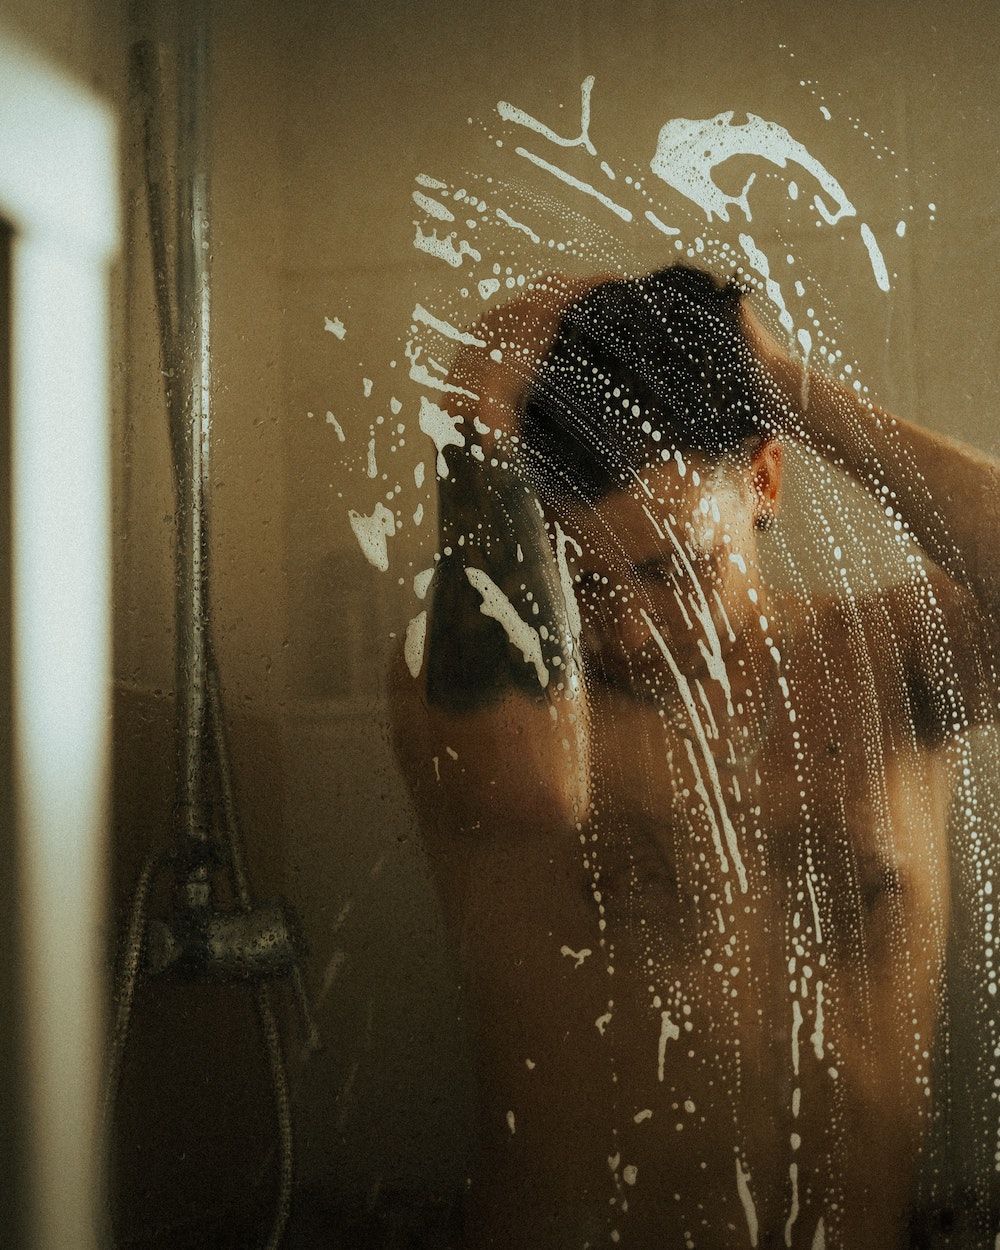 Akta huden - hur du duschar betyder mer än när du duschar